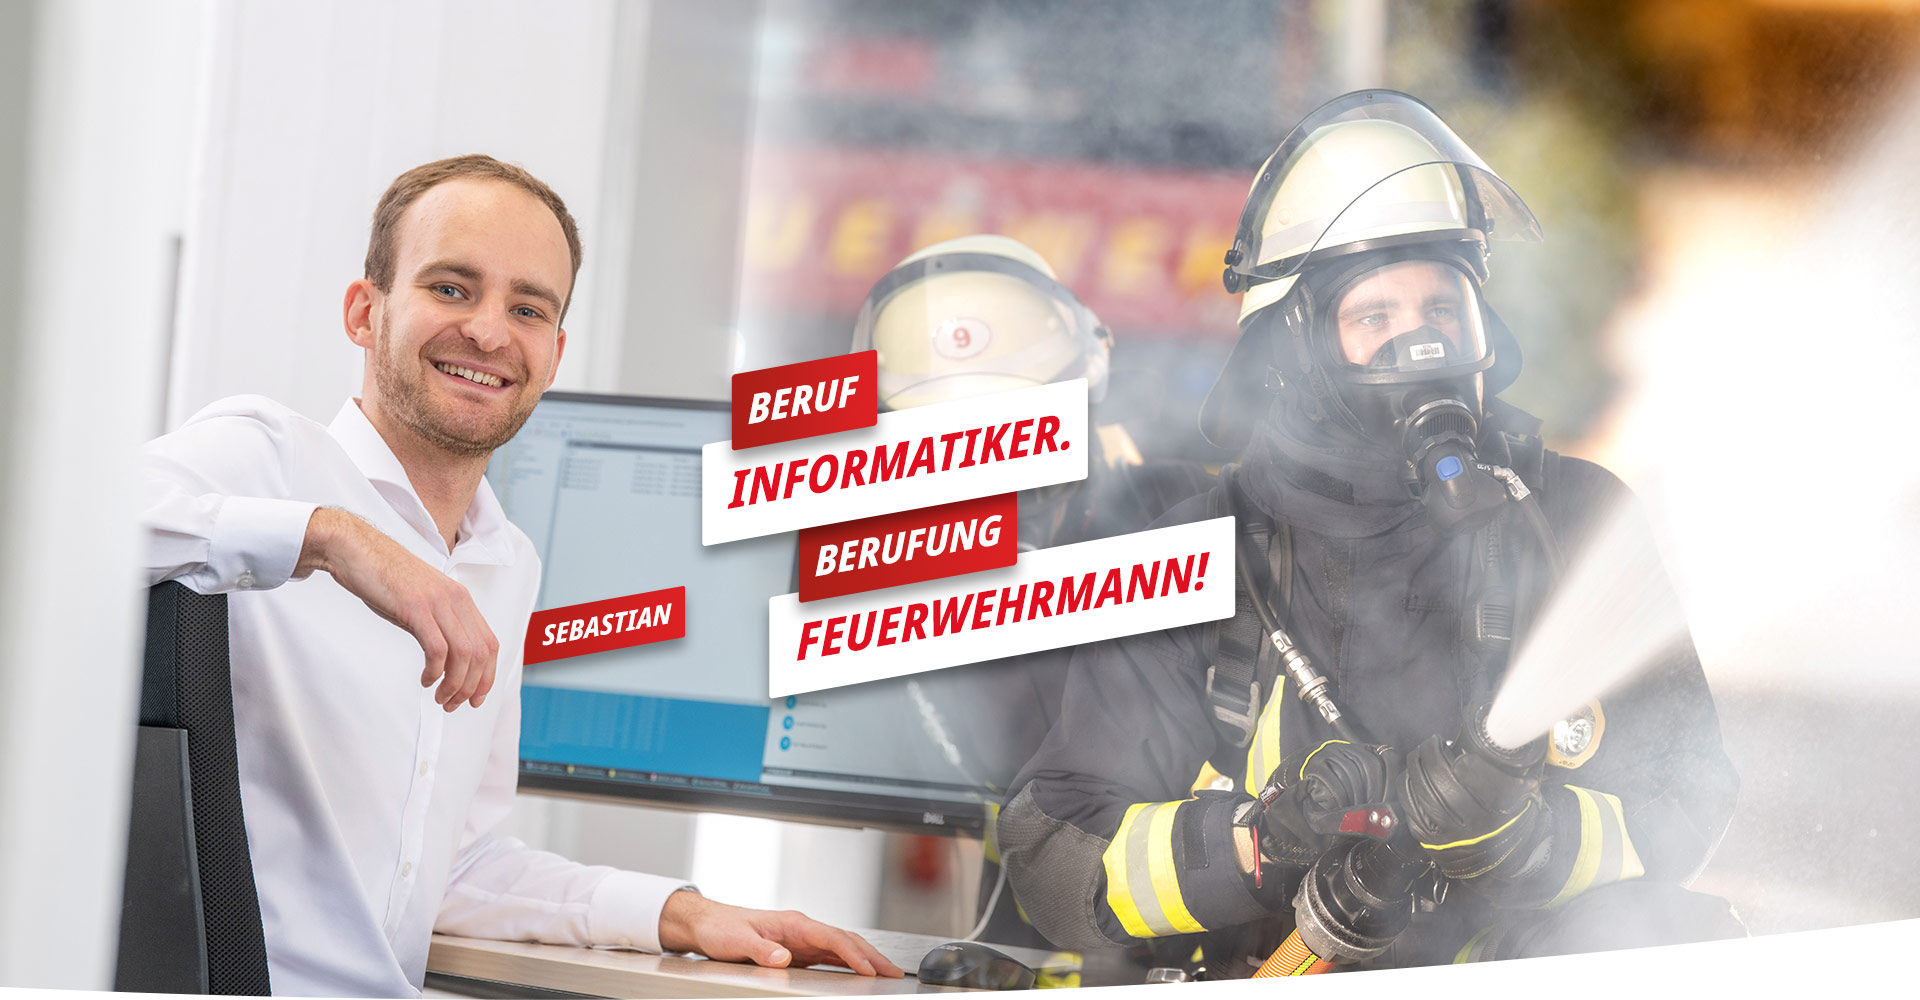 mehr zu Sebastian - Beruf Informatiker, Berufung Feuerwehrmann